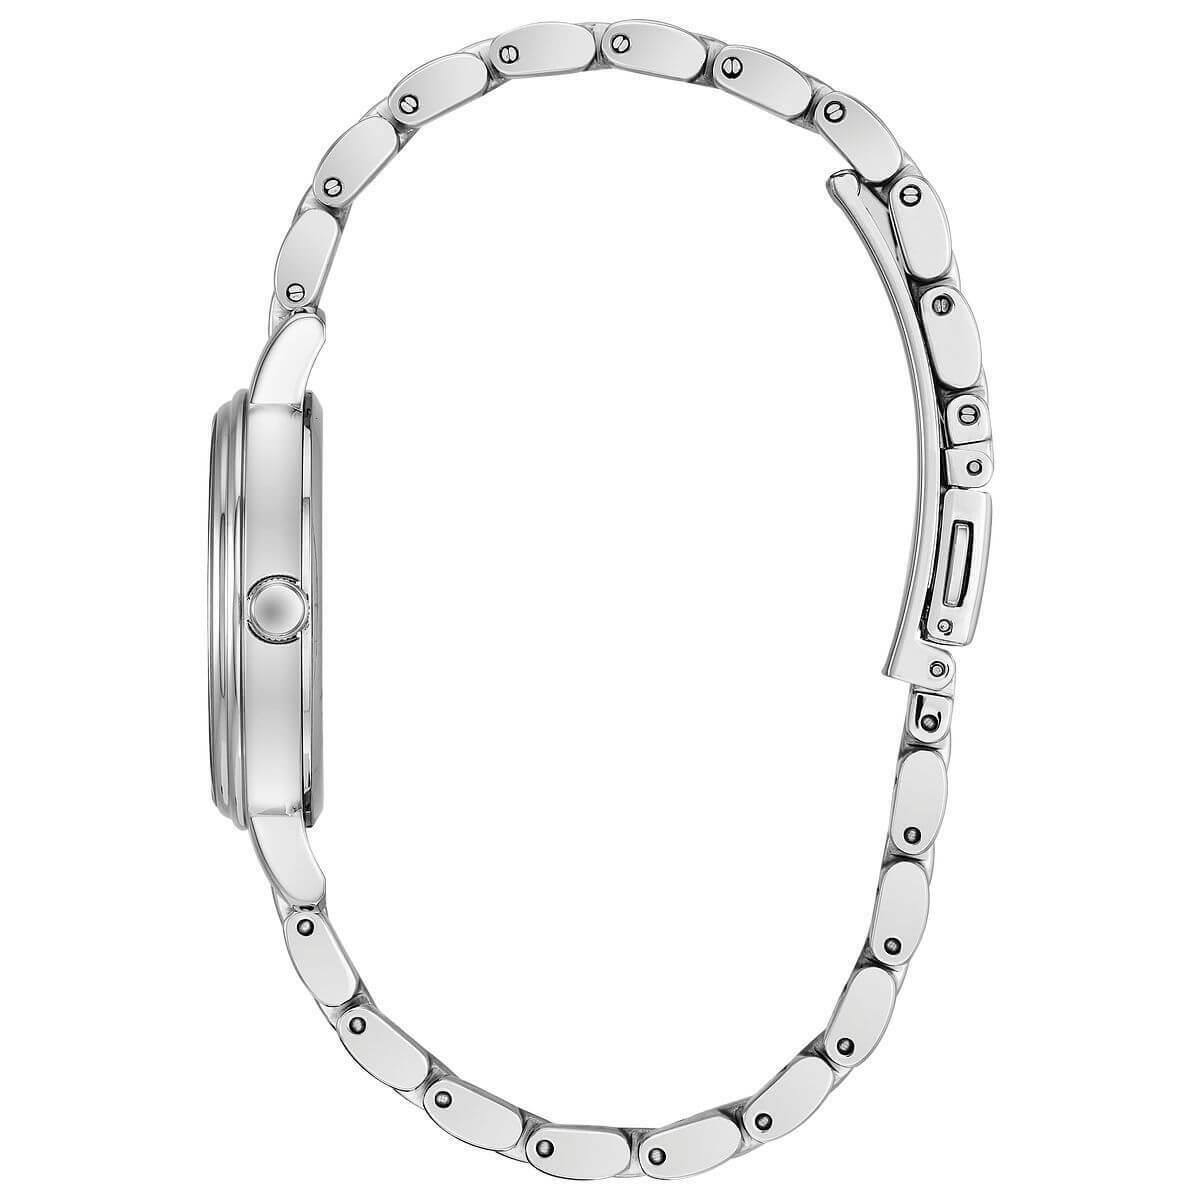 Citizen Chandler EW2440-53A Ladies 31mm Bracelet Watch - Dial: Silver, Band: Silver, Bezel: Silver